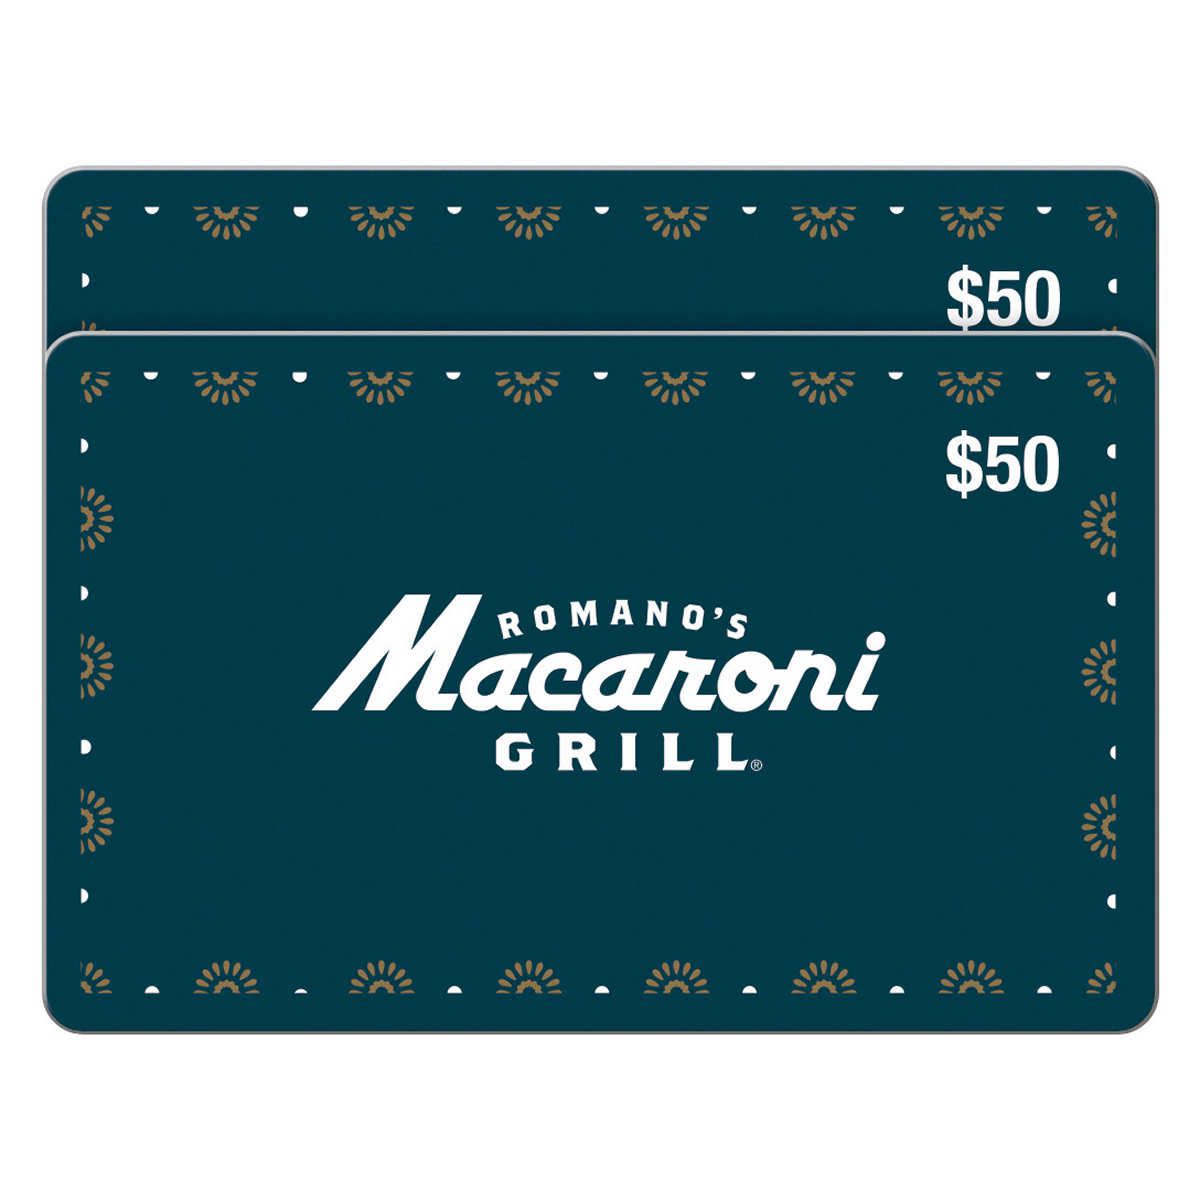 Romano's Macaroni Grill Two Restaurant $50 E-Gift Cards